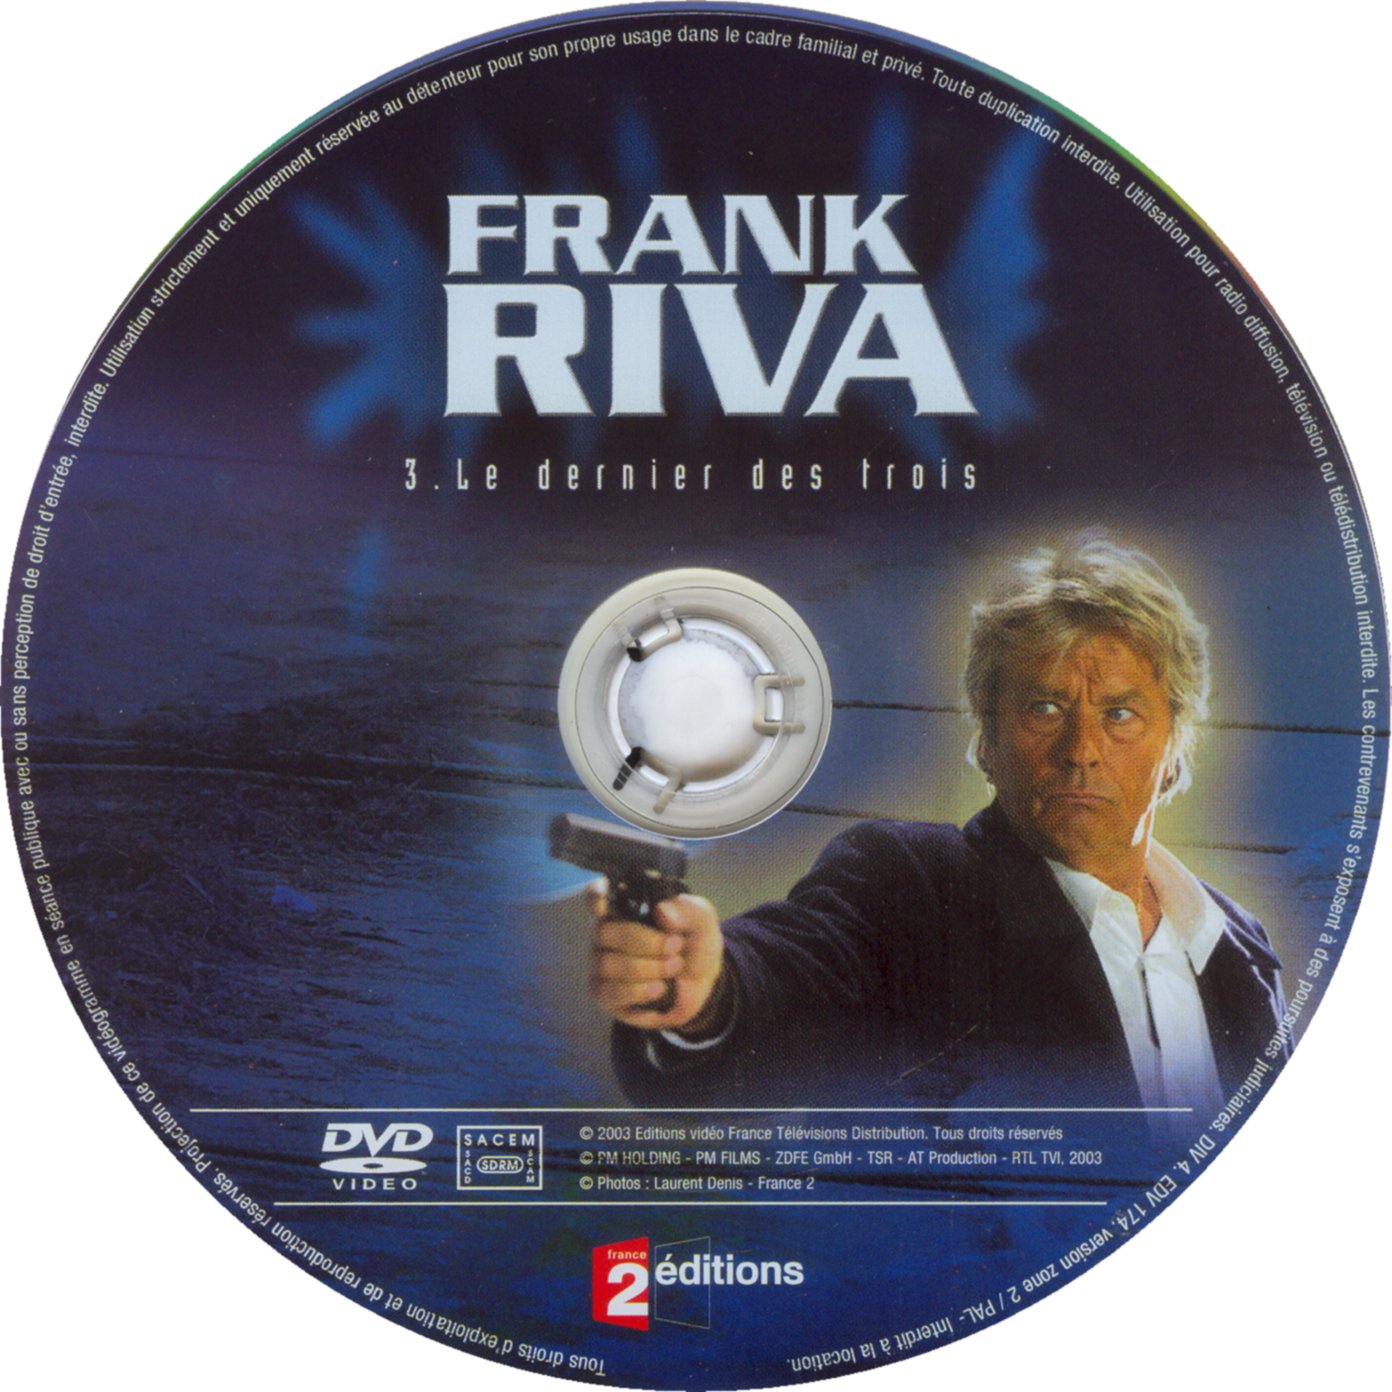 Frank Riva saison 1 DVD 2